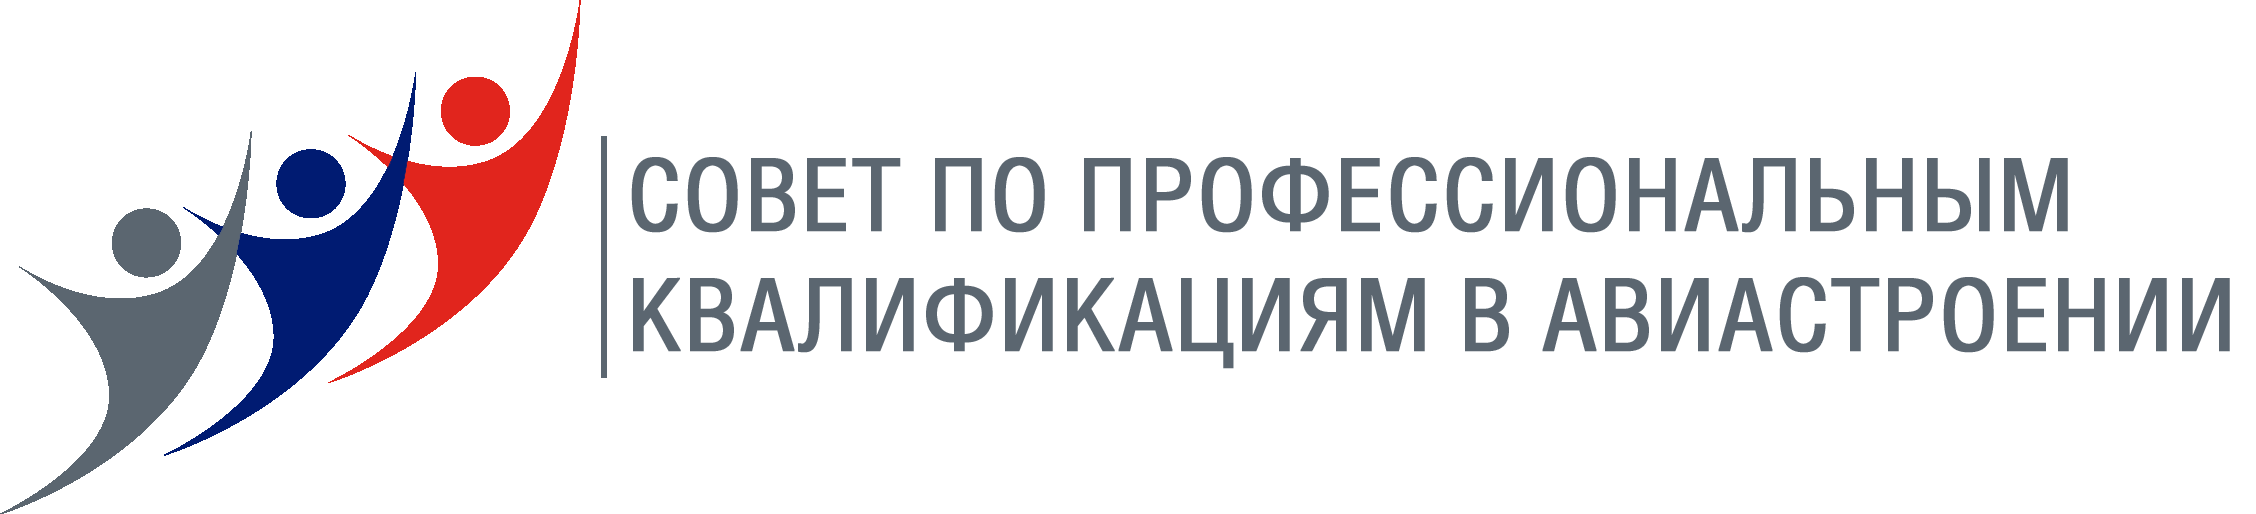 ОАК_logo_RUS.png